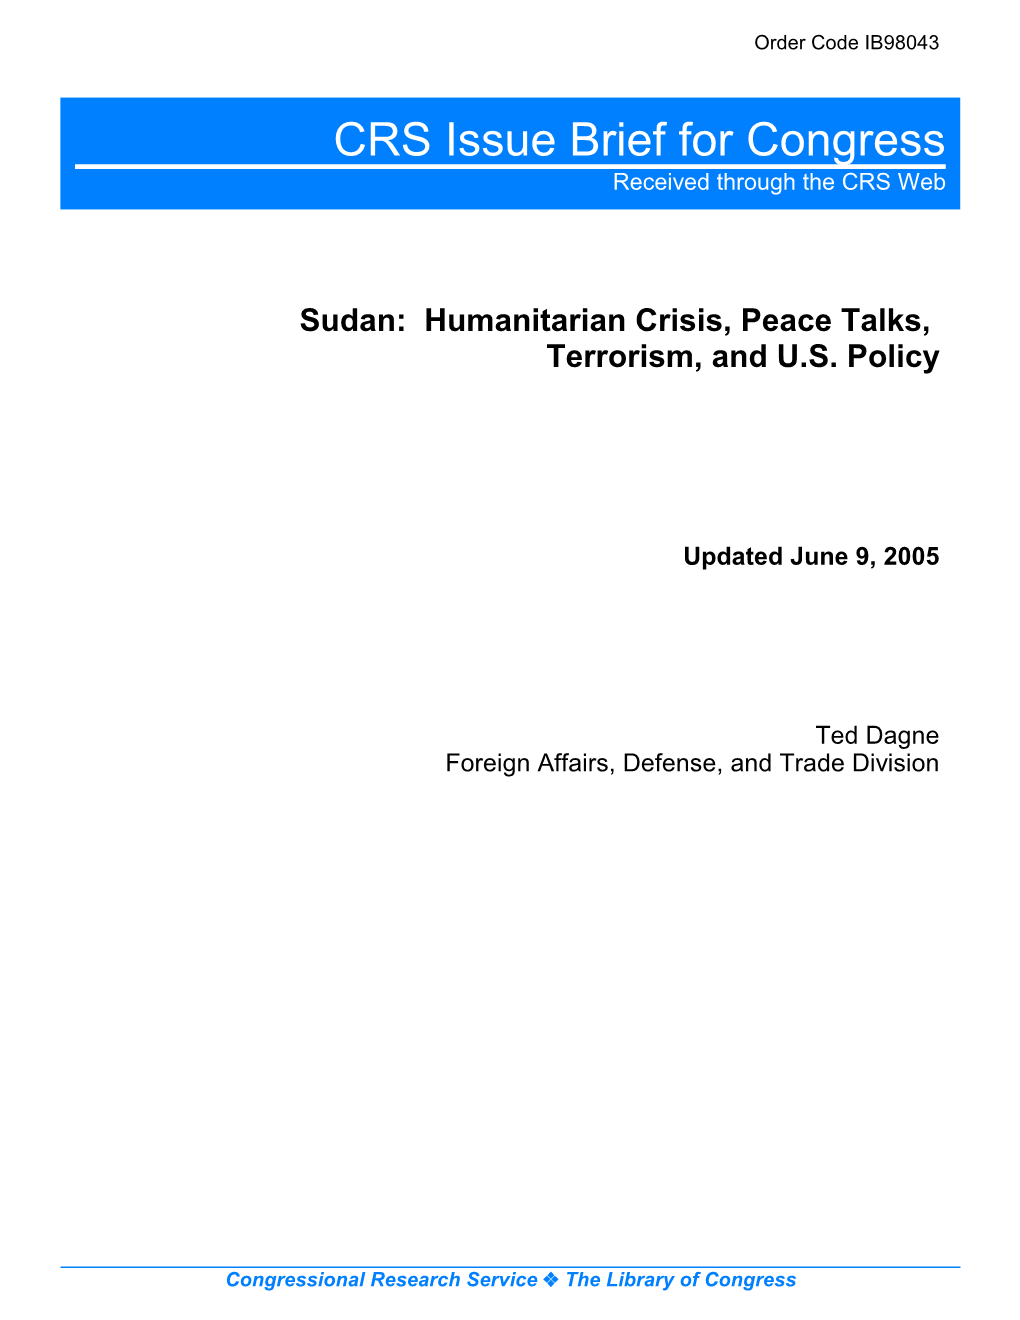 Sudan: Humanitarian Crisis, Peace Talks, Terrorism, and U.S. Policy